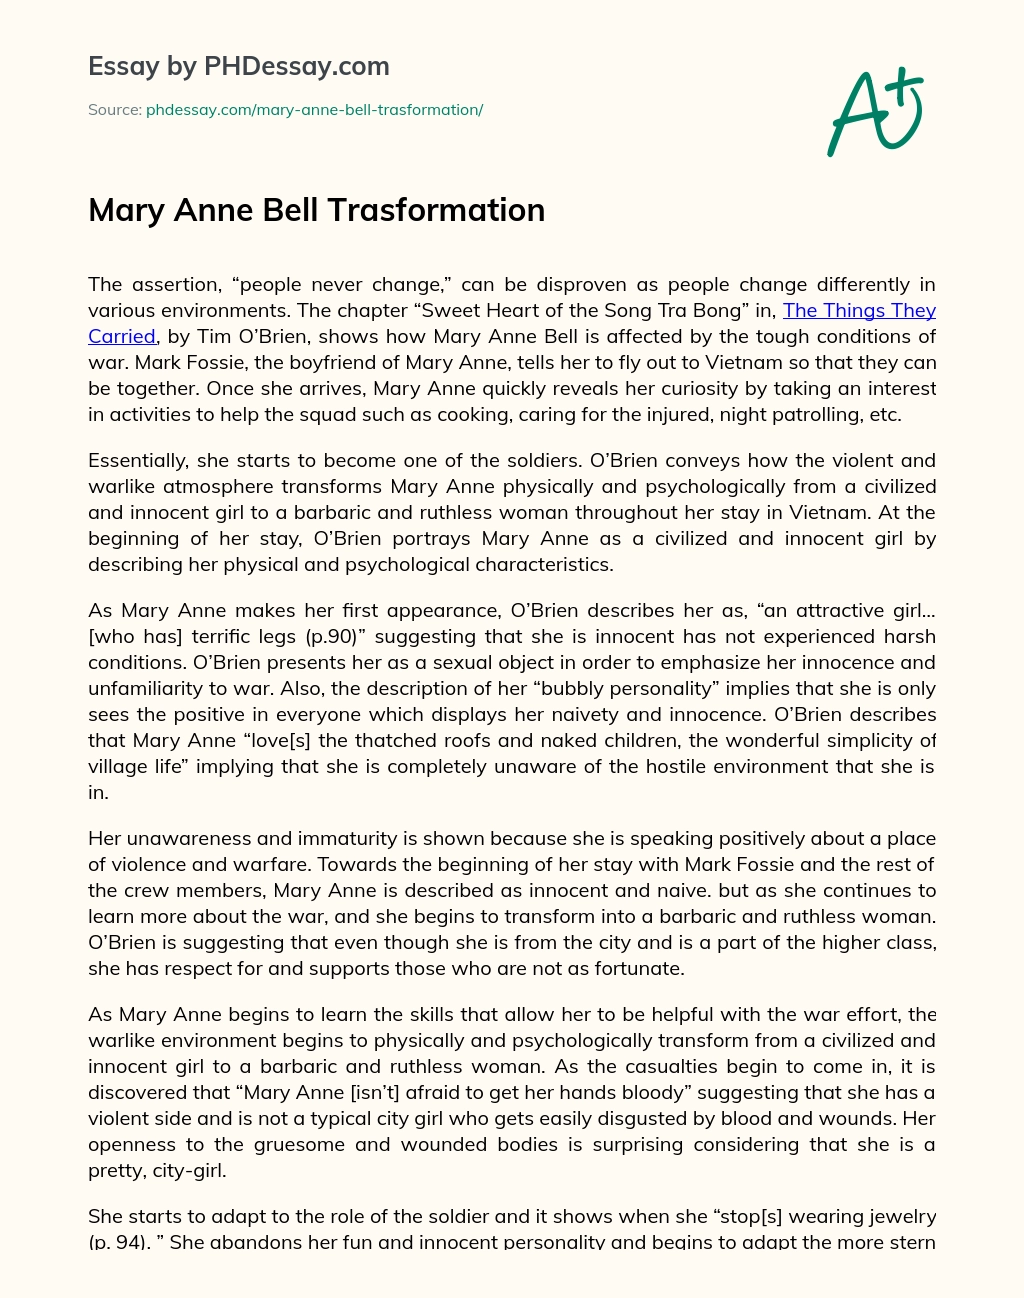 Mary Anne Bell Trasformation essay